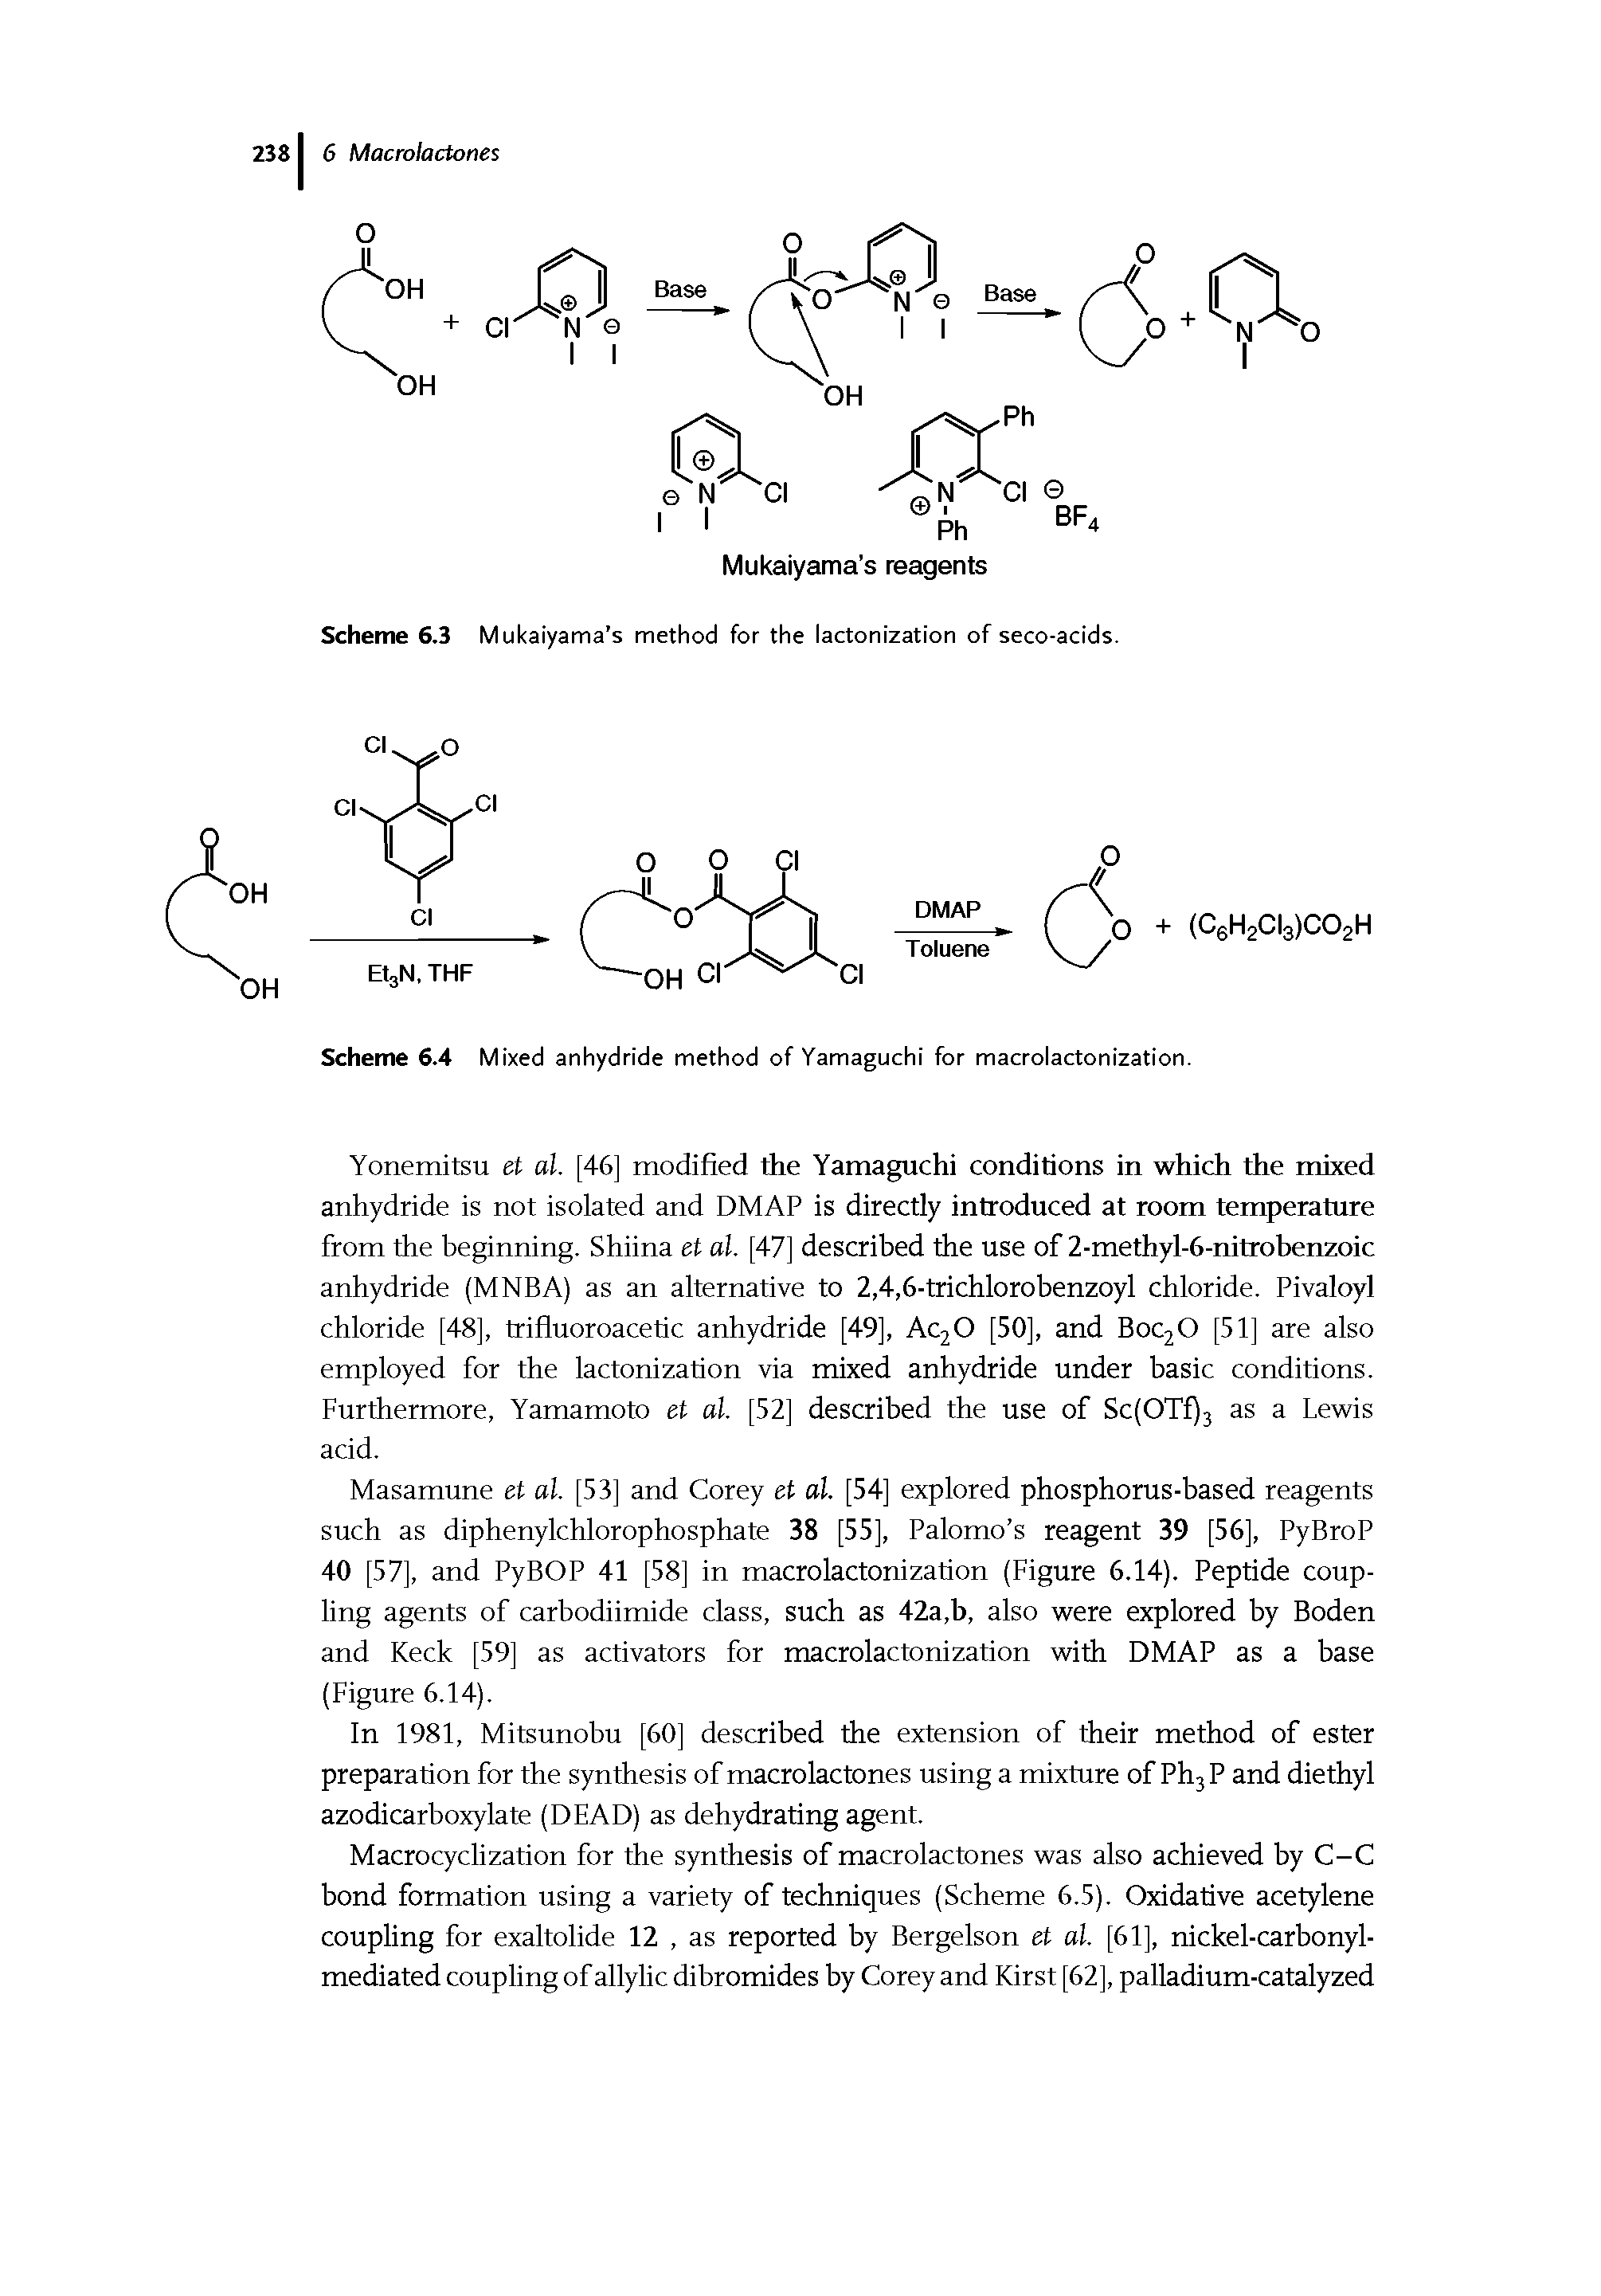 Scheme 6.4 Mixed anhydride method of Yamaguchi for macrolactonization...